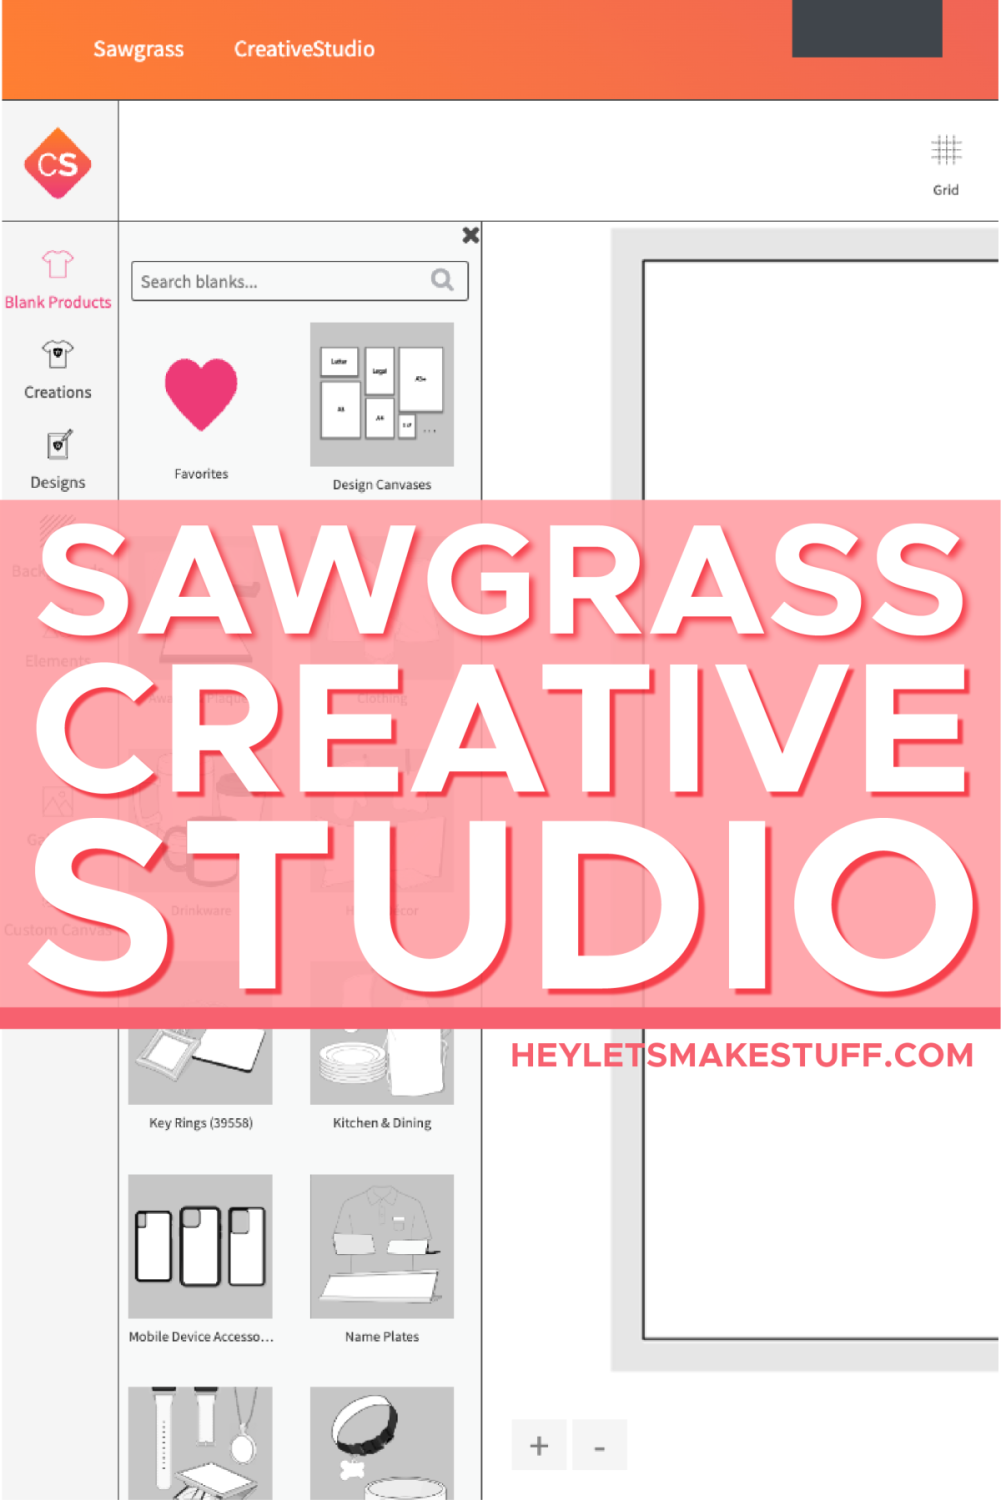 Screenshot of Sawgrass Creative Studio with a pink banner that says "Sawgrass Creative Studio."